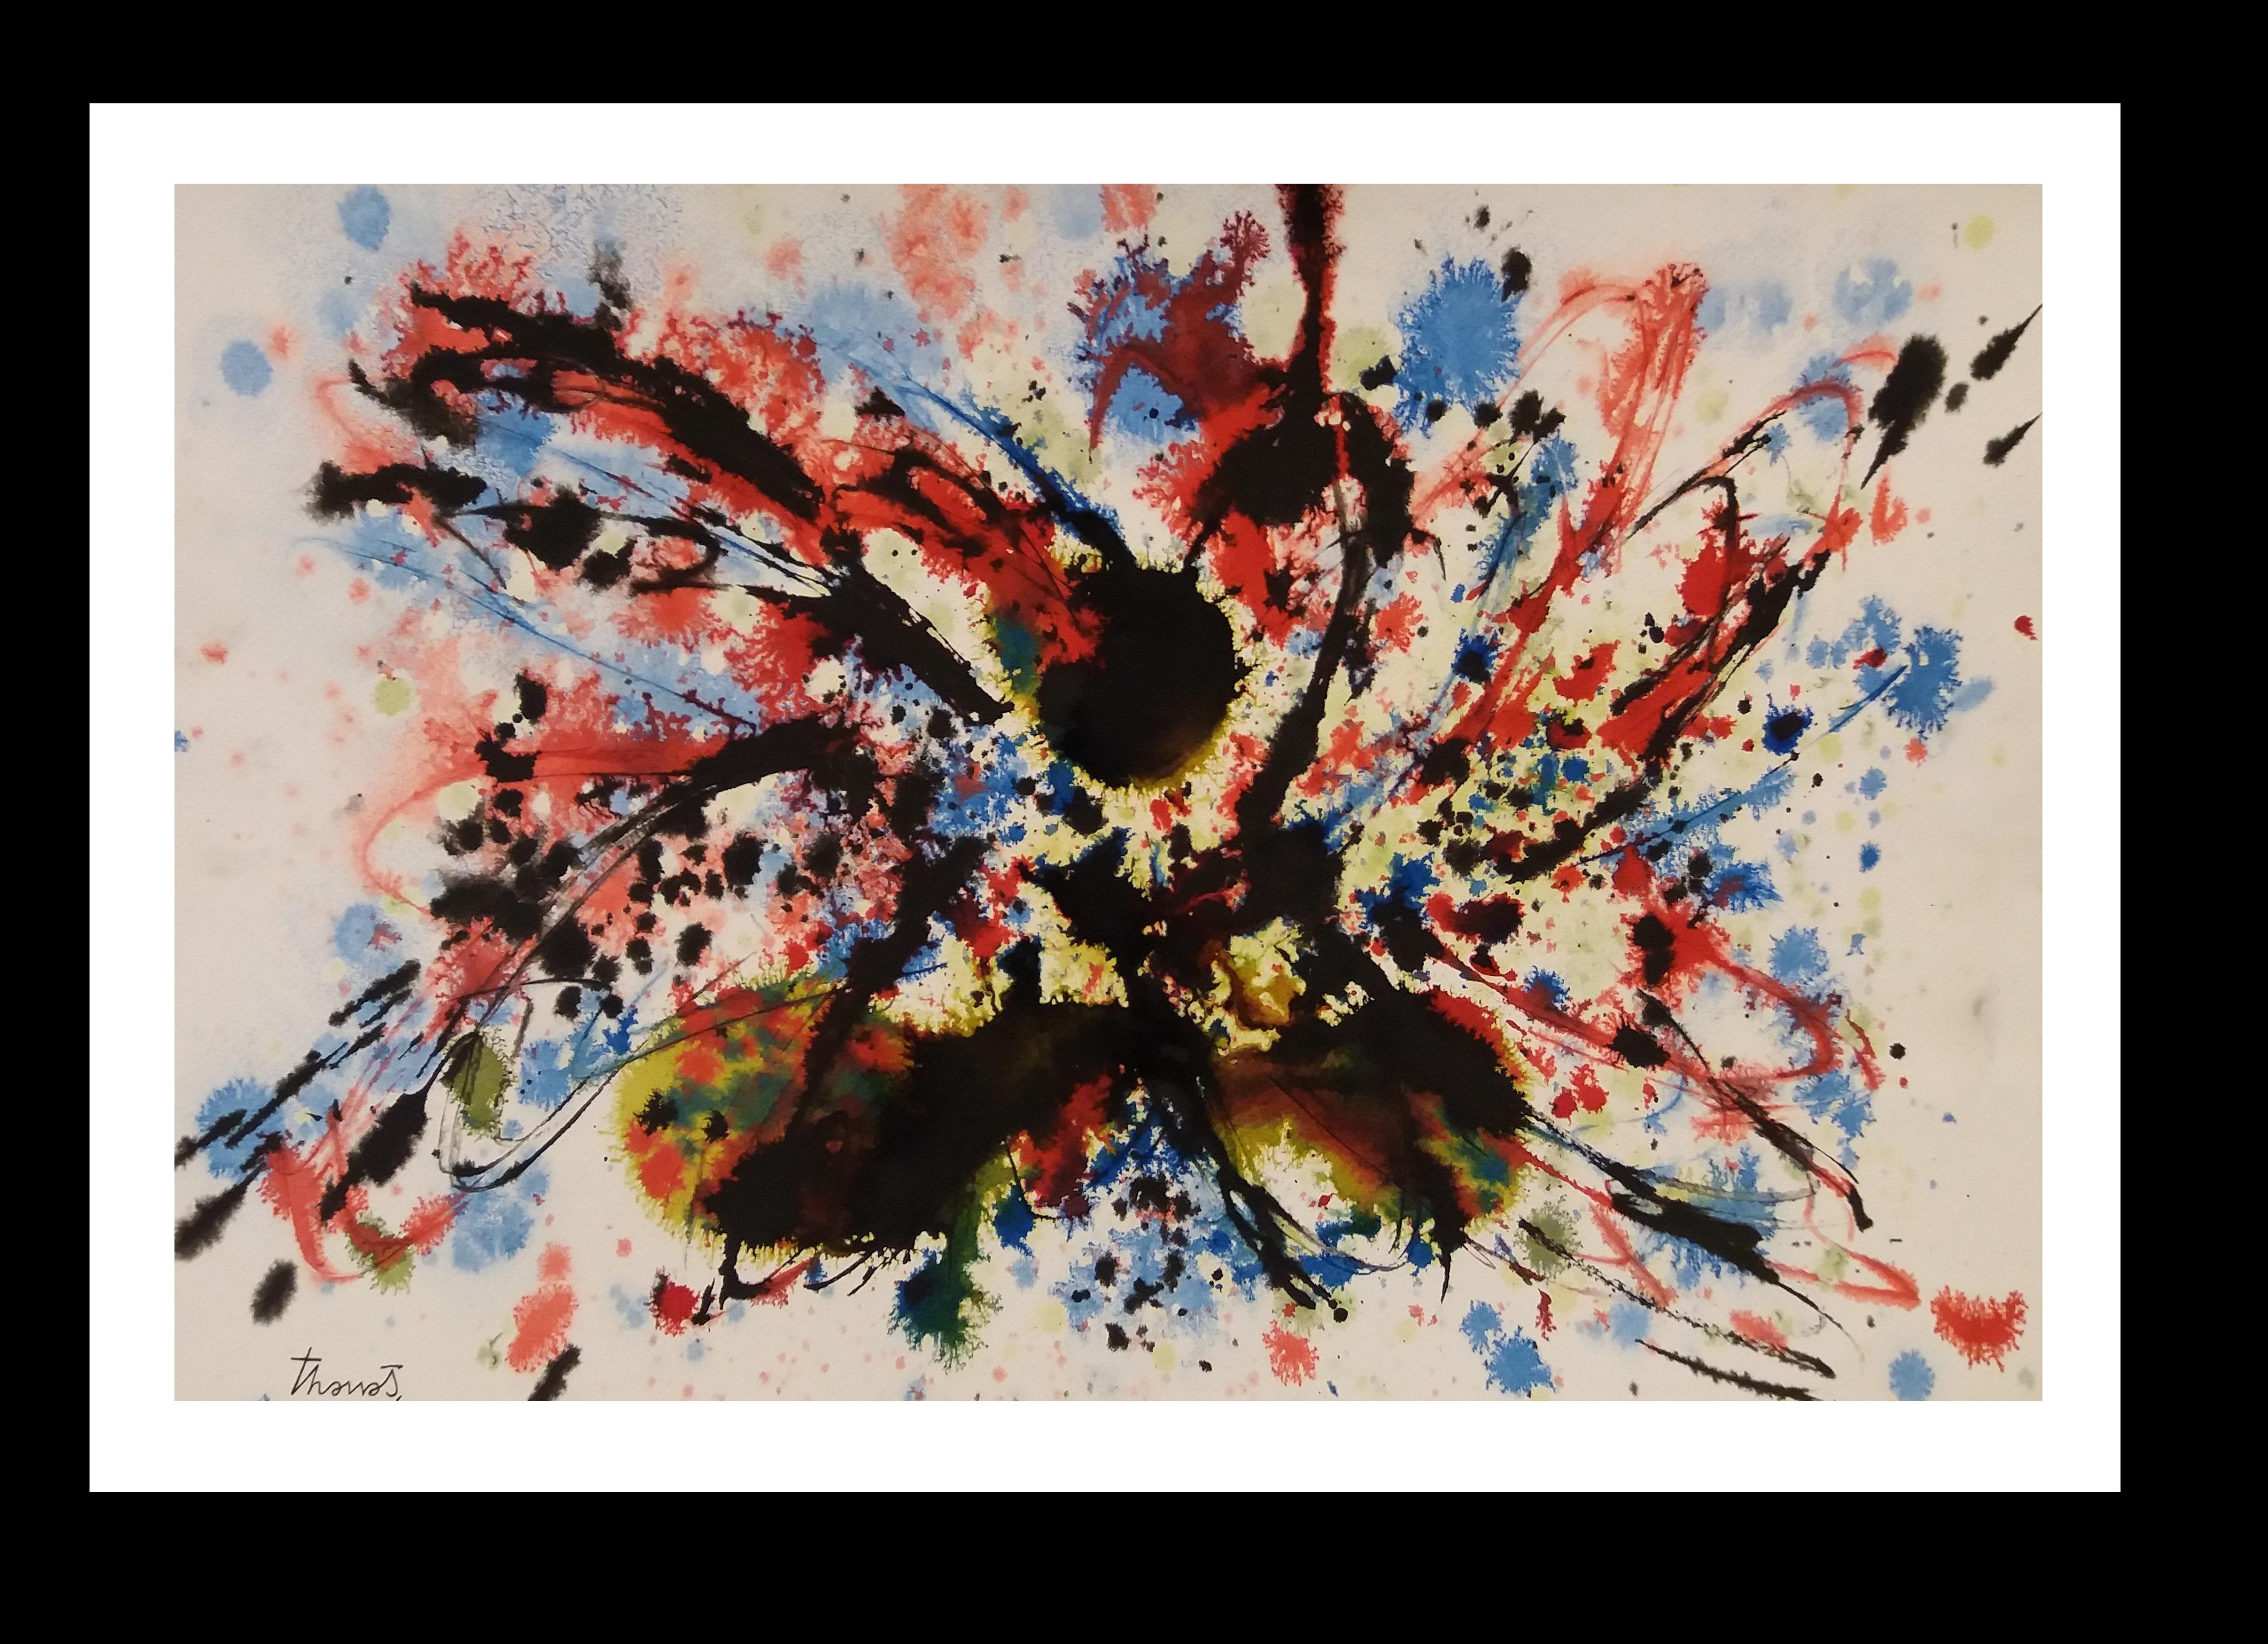 Josep THARRATS Abstract Painting - Tharrats  Reds  Blacks  Blue original abstract acrylic paper painting